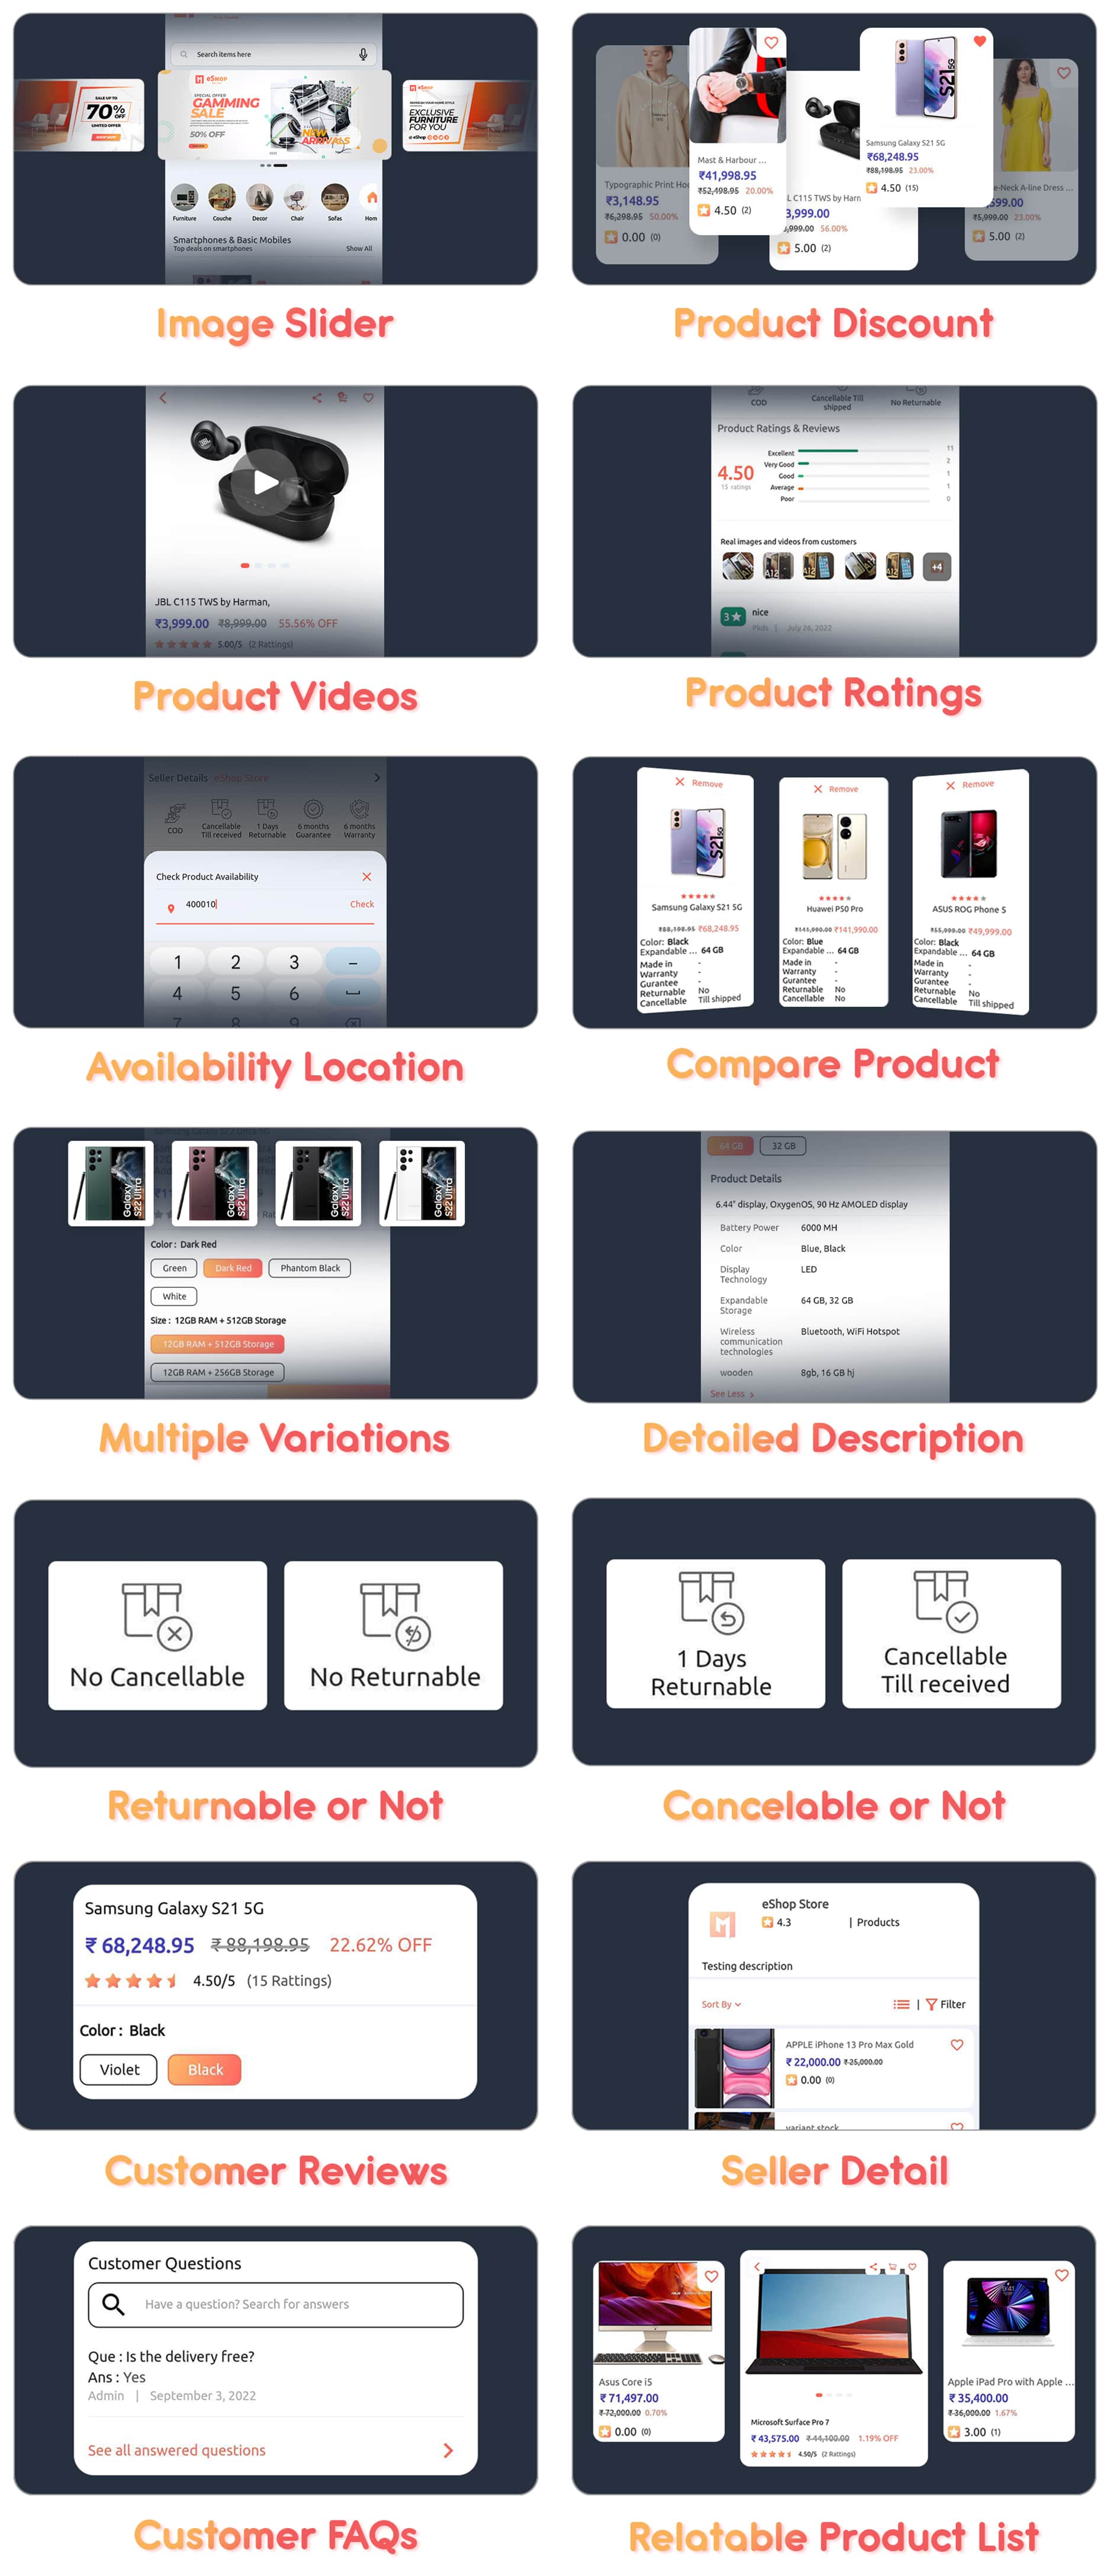 eShop - Multi Vendor eCommerce App & eCommerce Vendor Marketplace Flutter App - 23